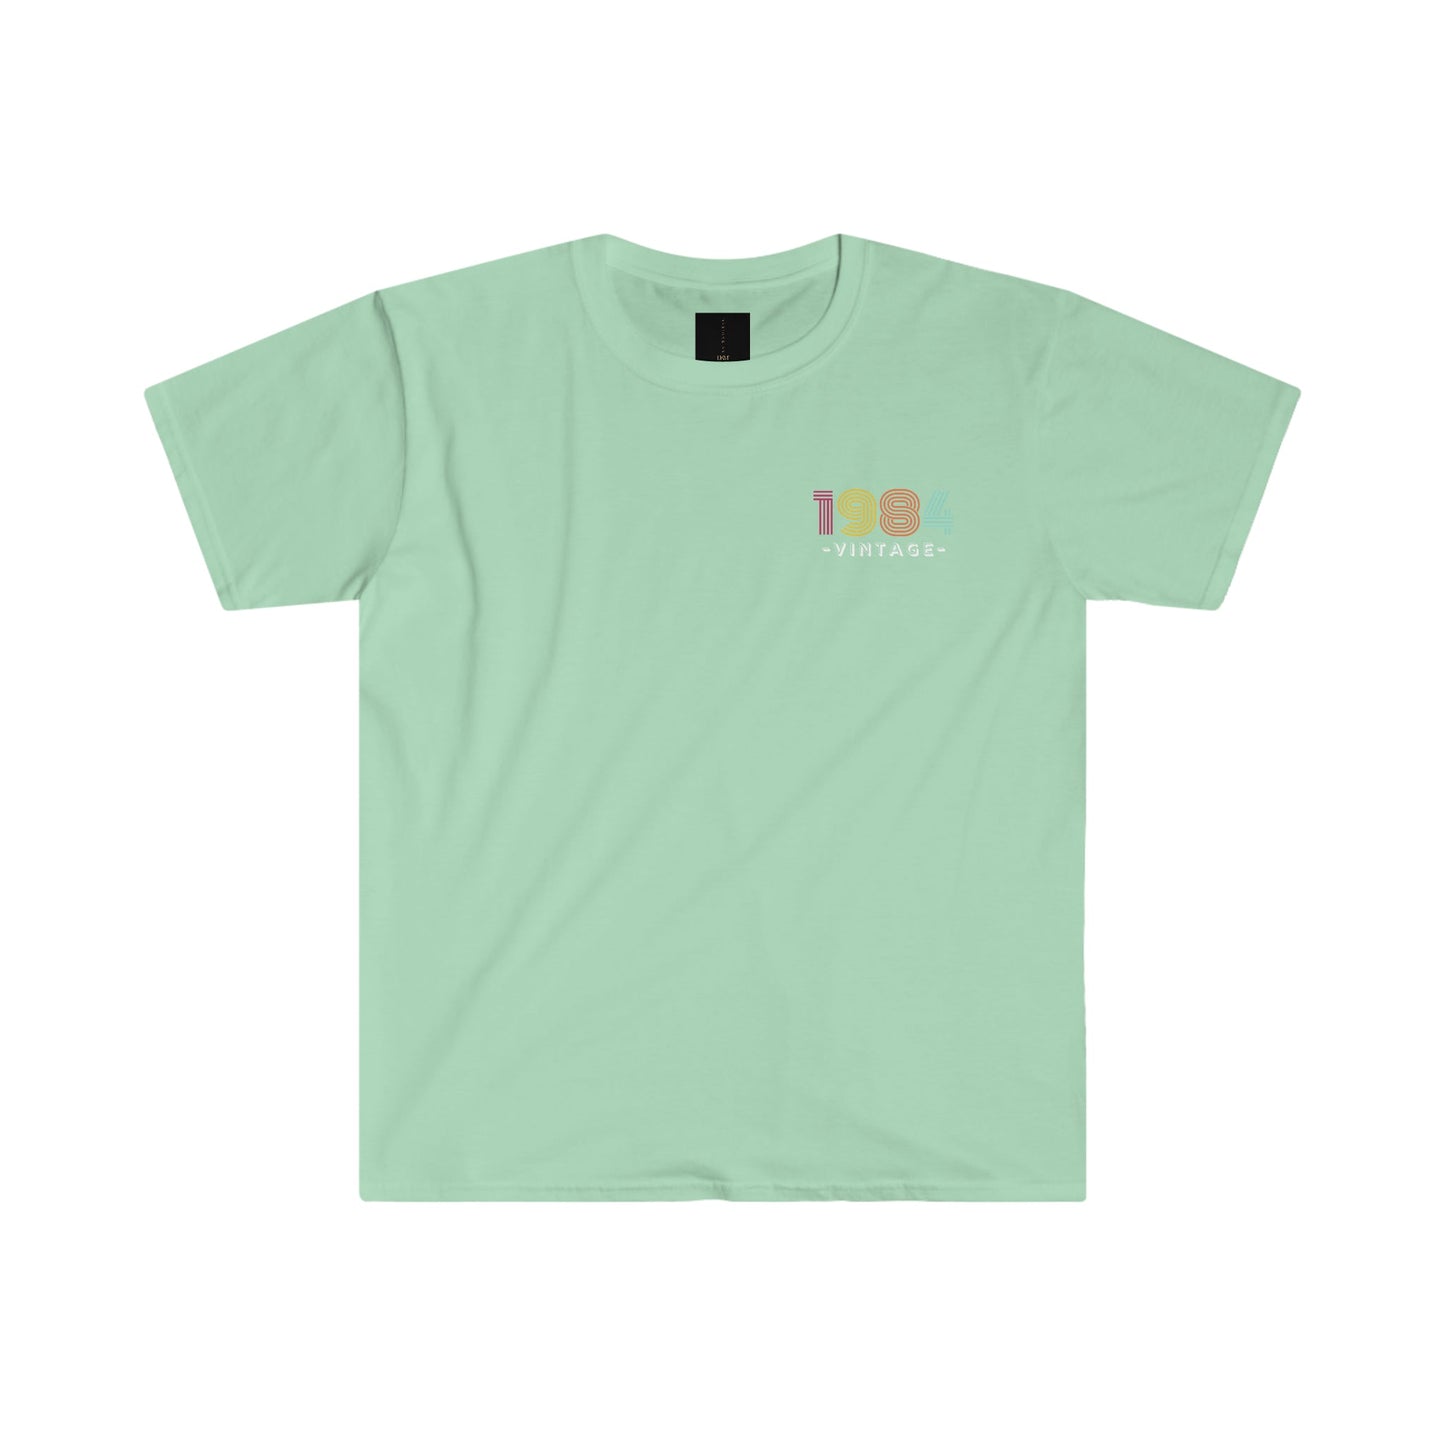 1984 Vintage, Unisex T-Shirt - Designs by DKMc